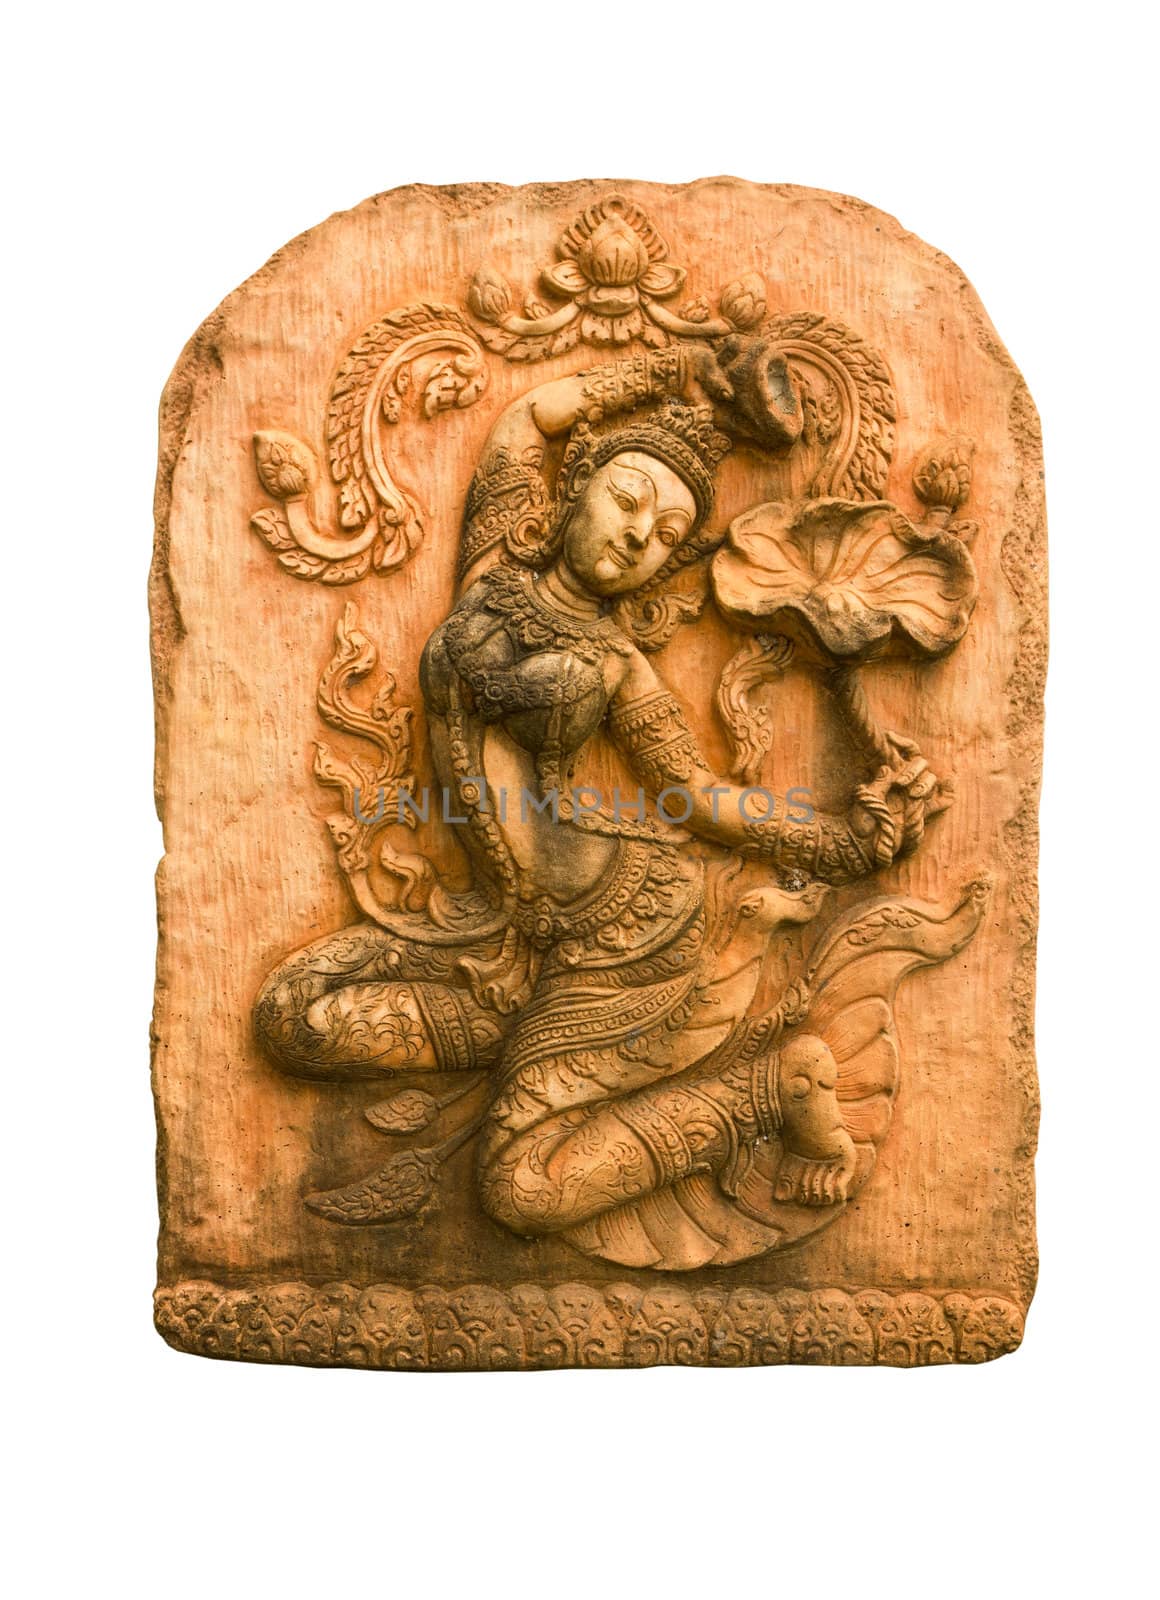 Sandstone carvings woman dancsing in Thailand